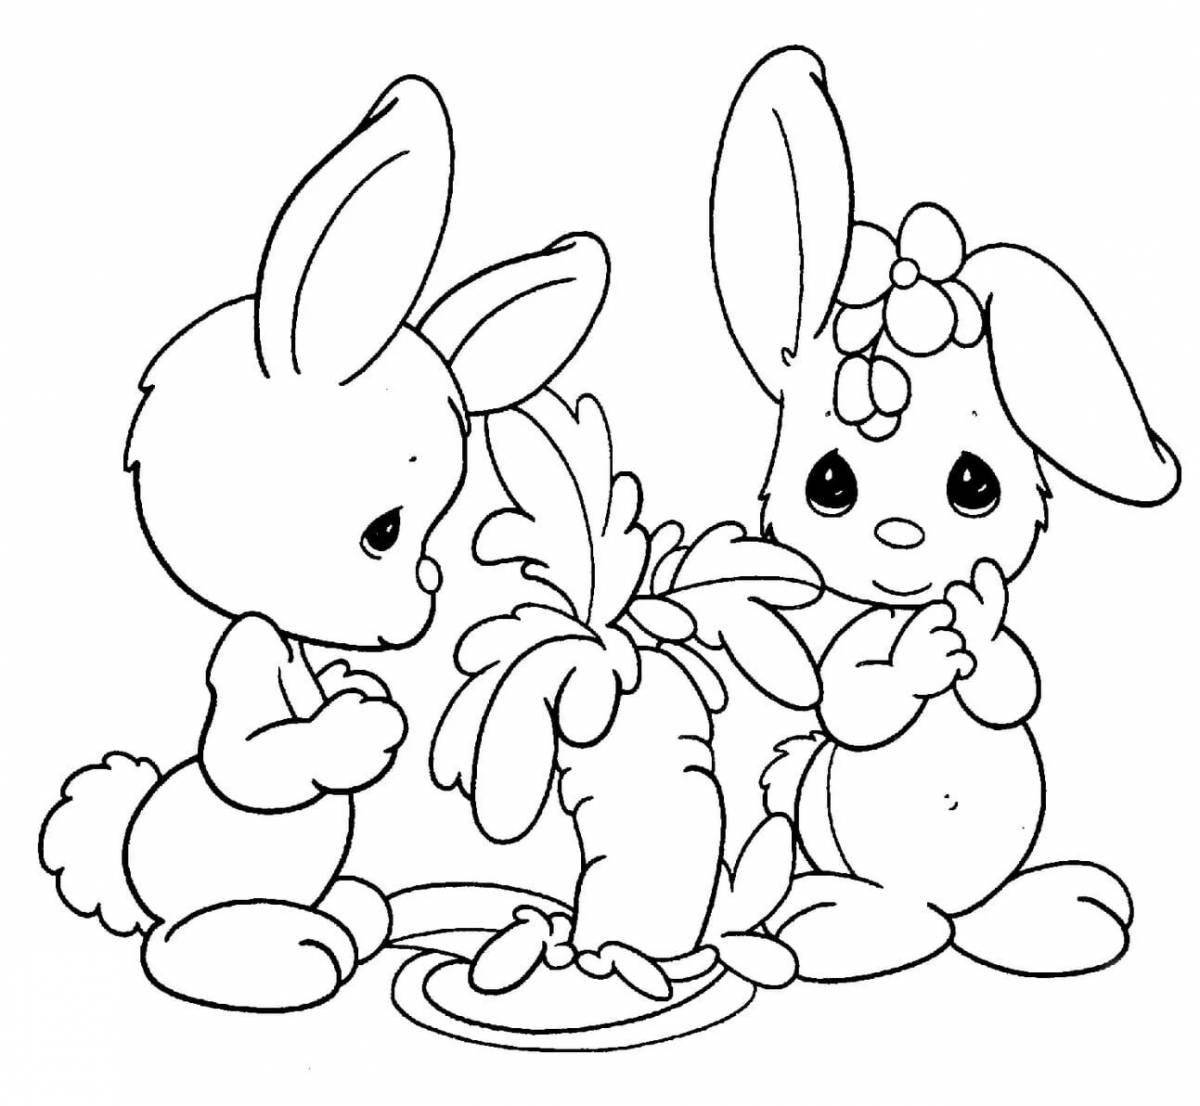 Baby bunny big-eyed coloring book